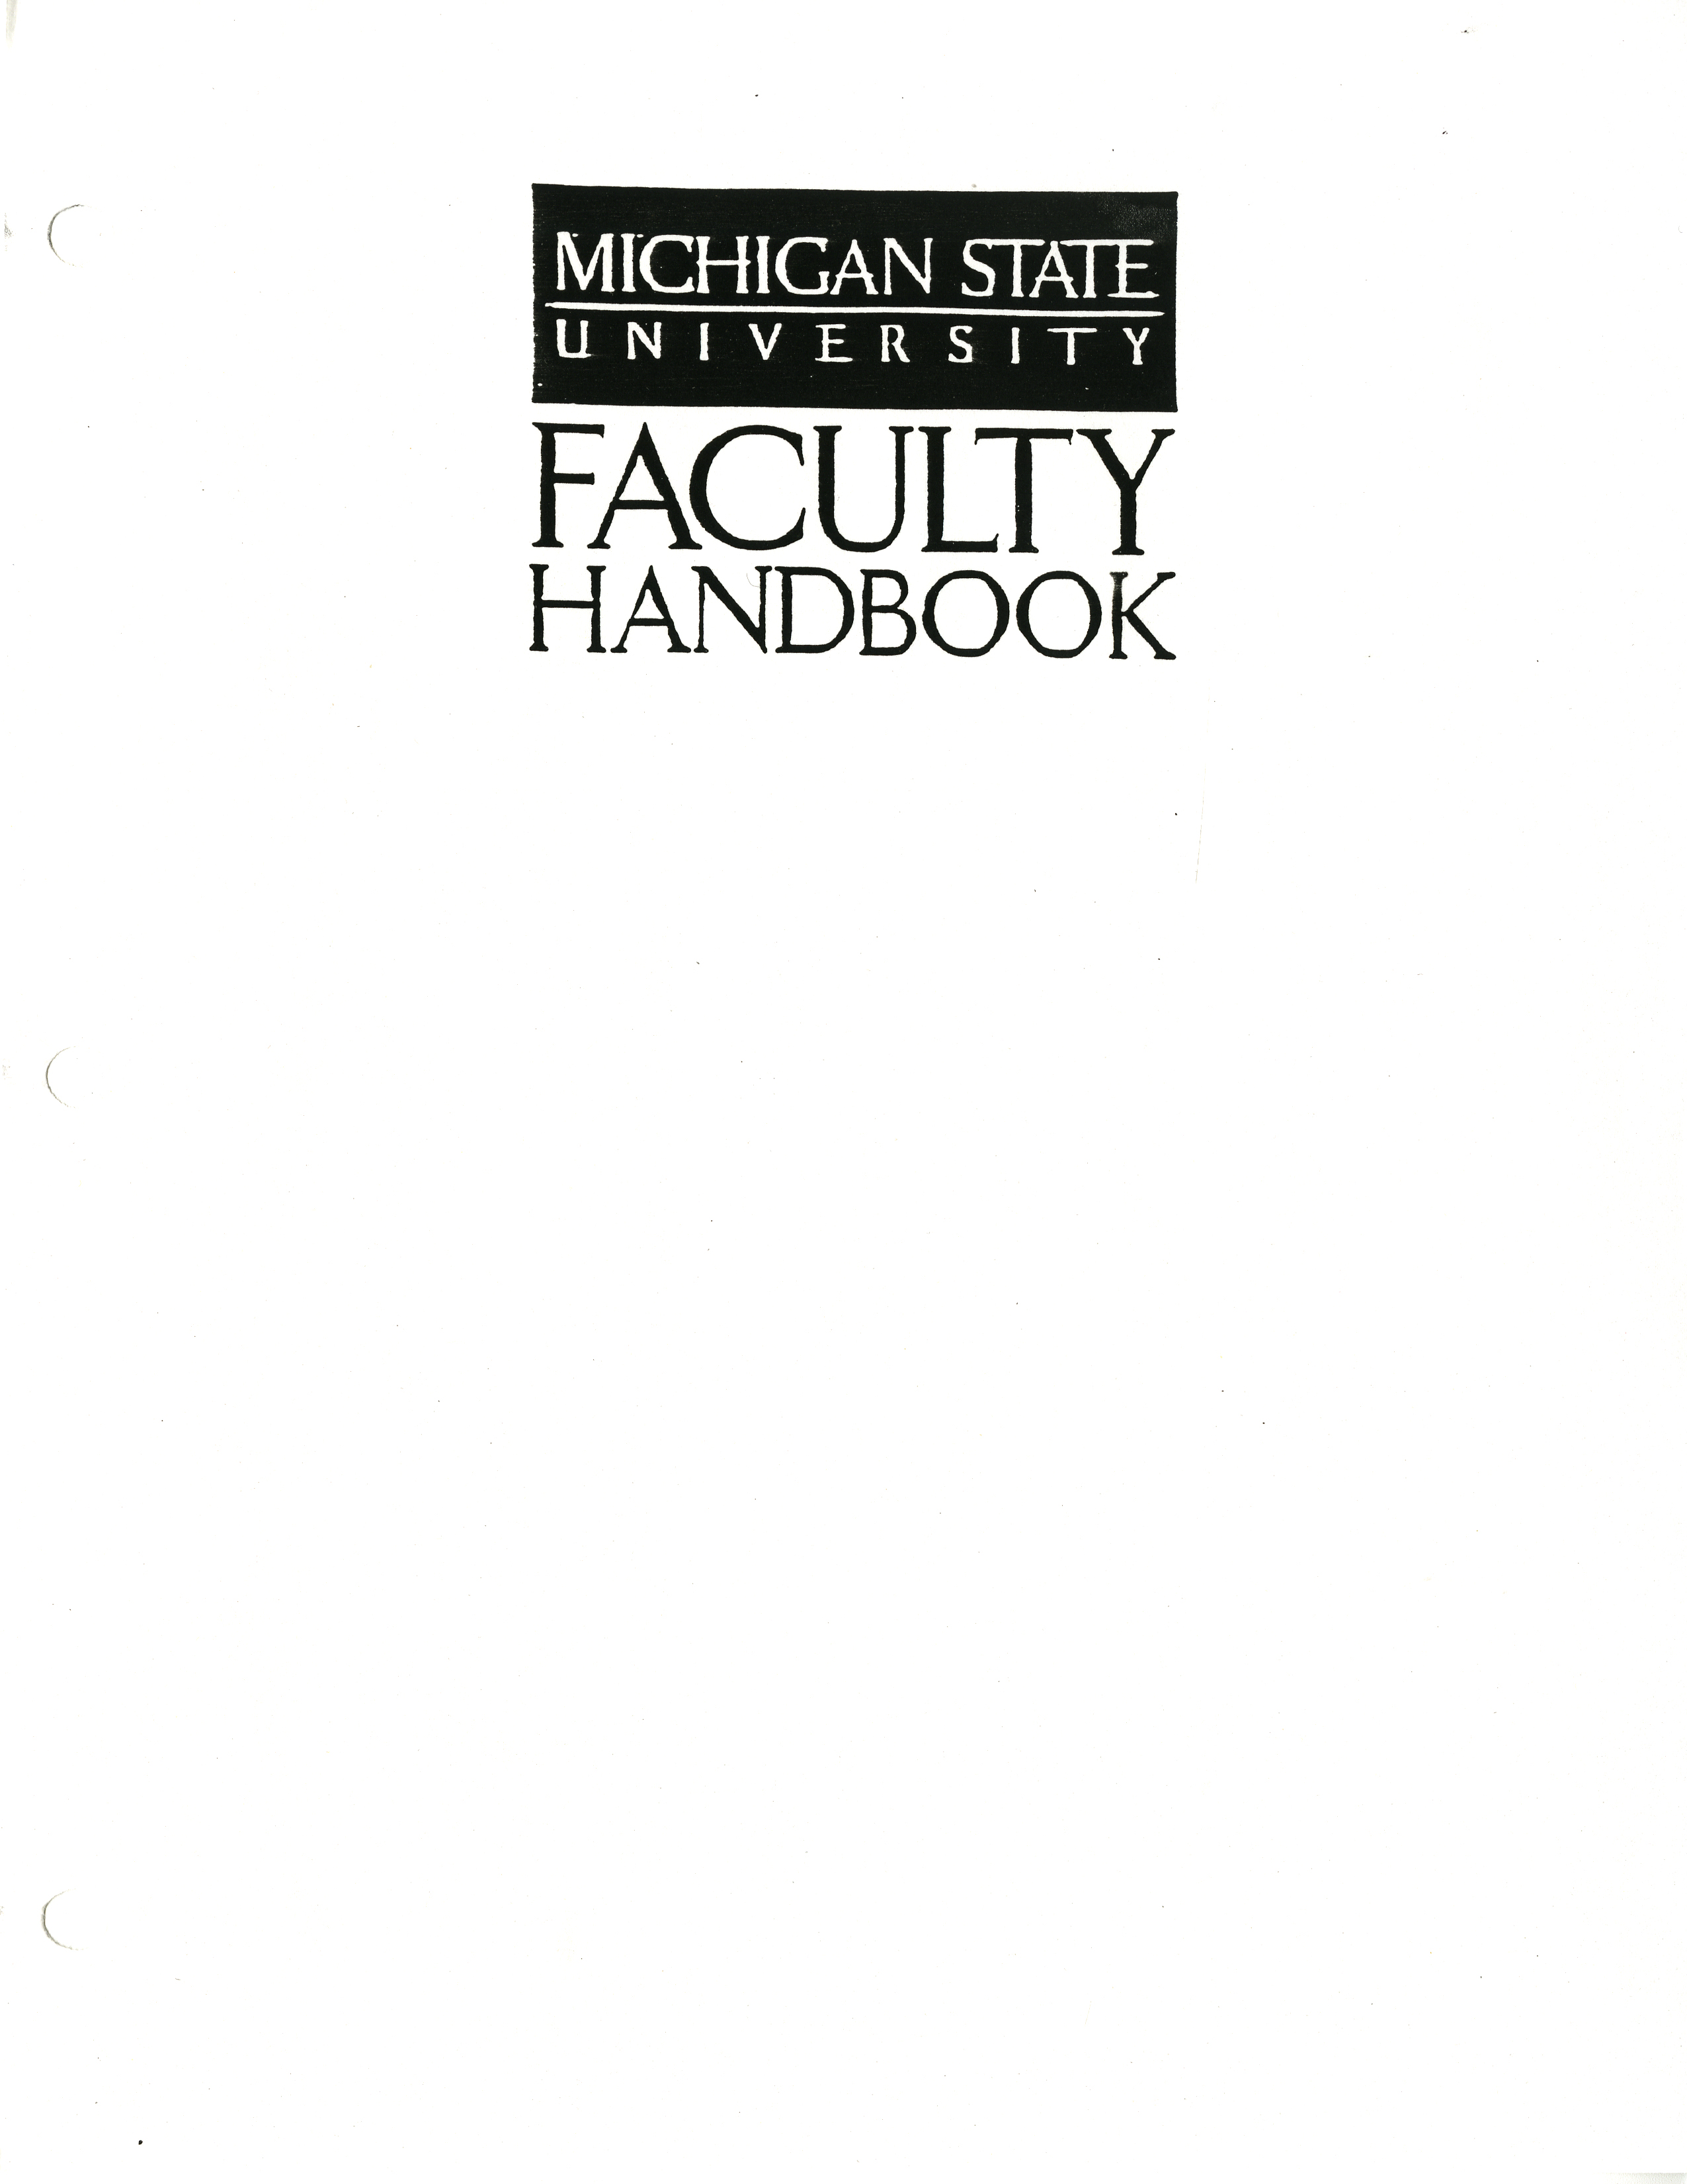 Faculty Handbooks, 1990-1999